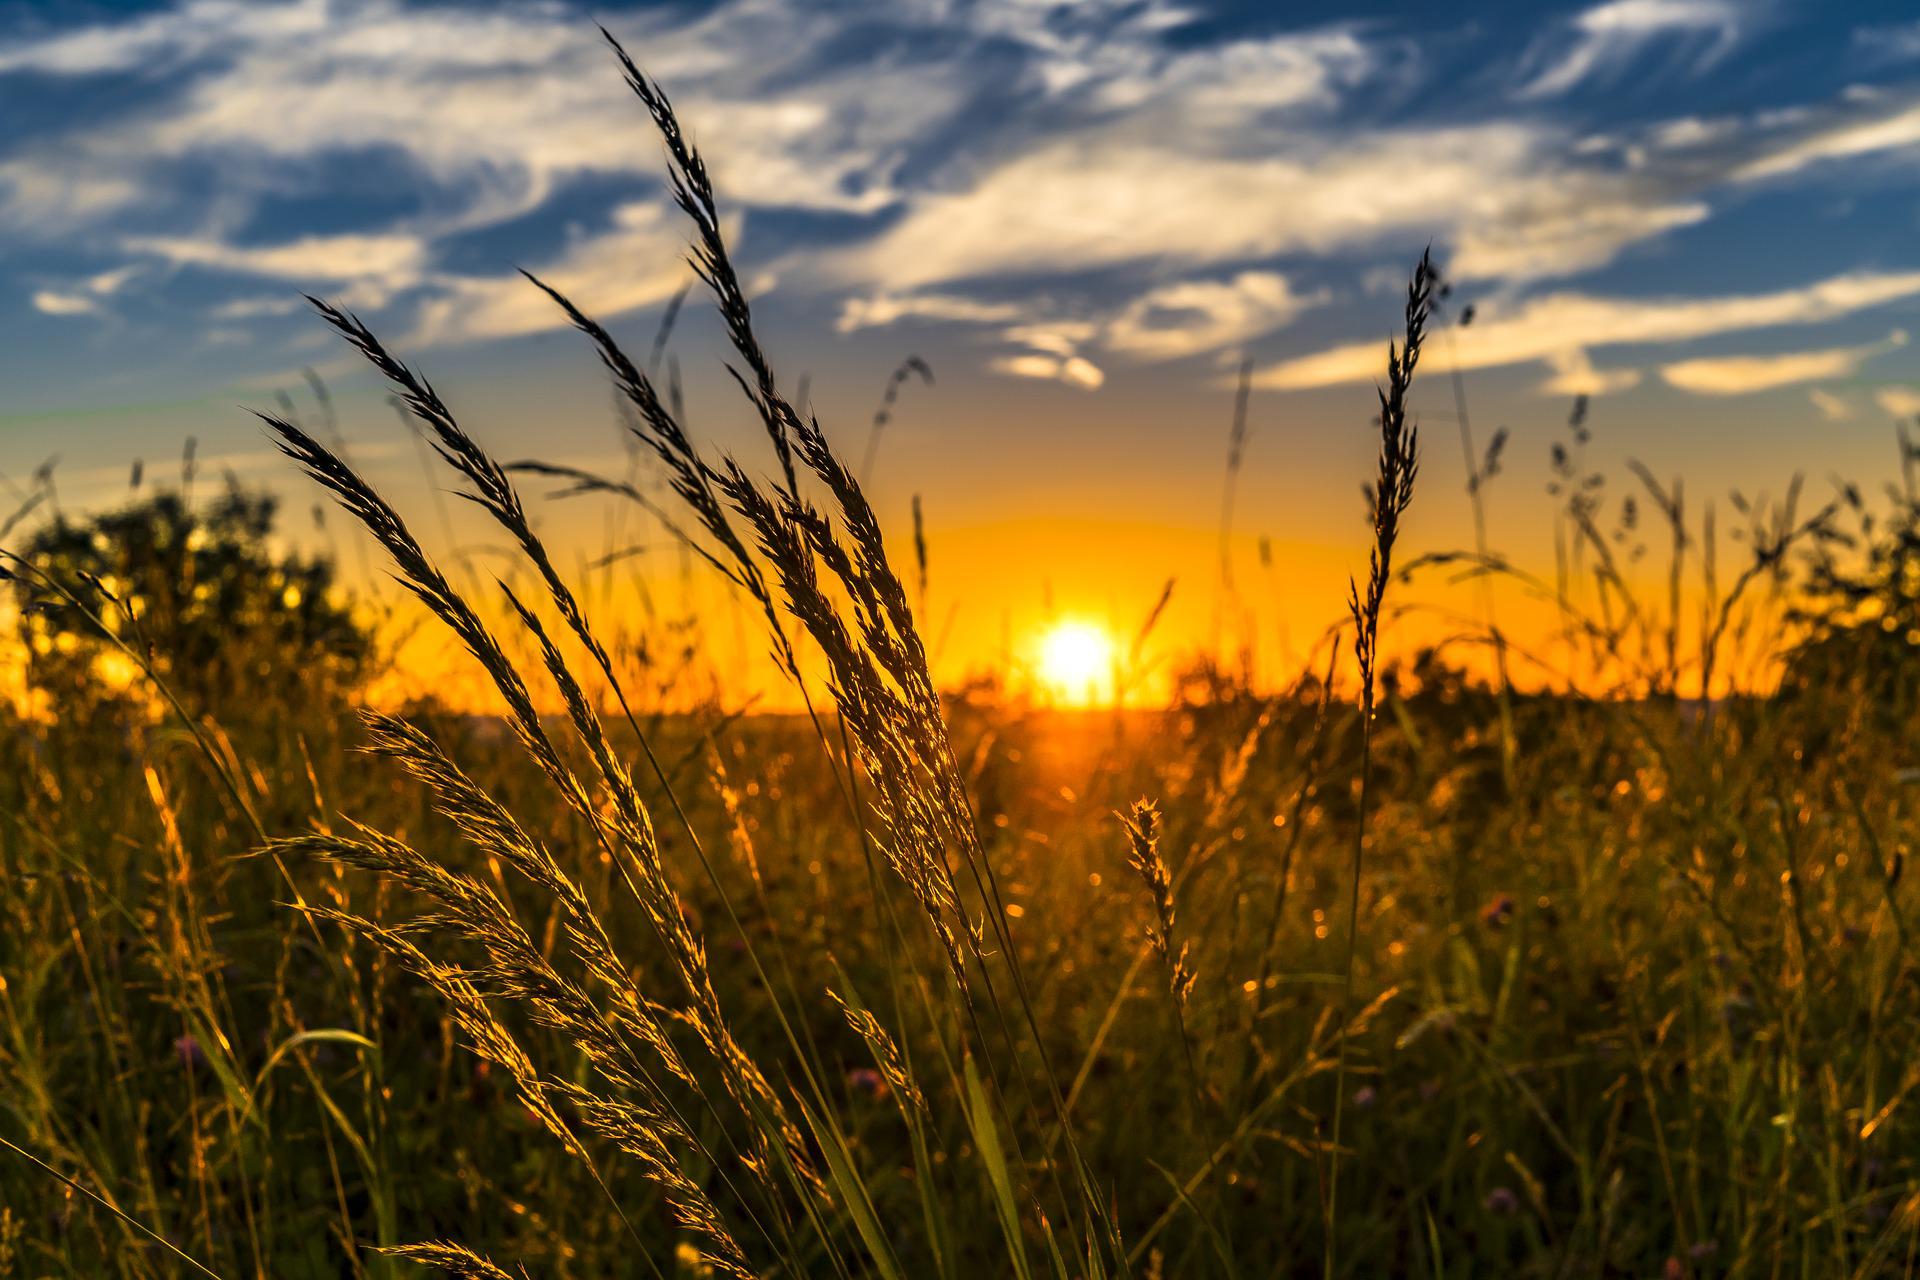 Sun setting over a field of grass